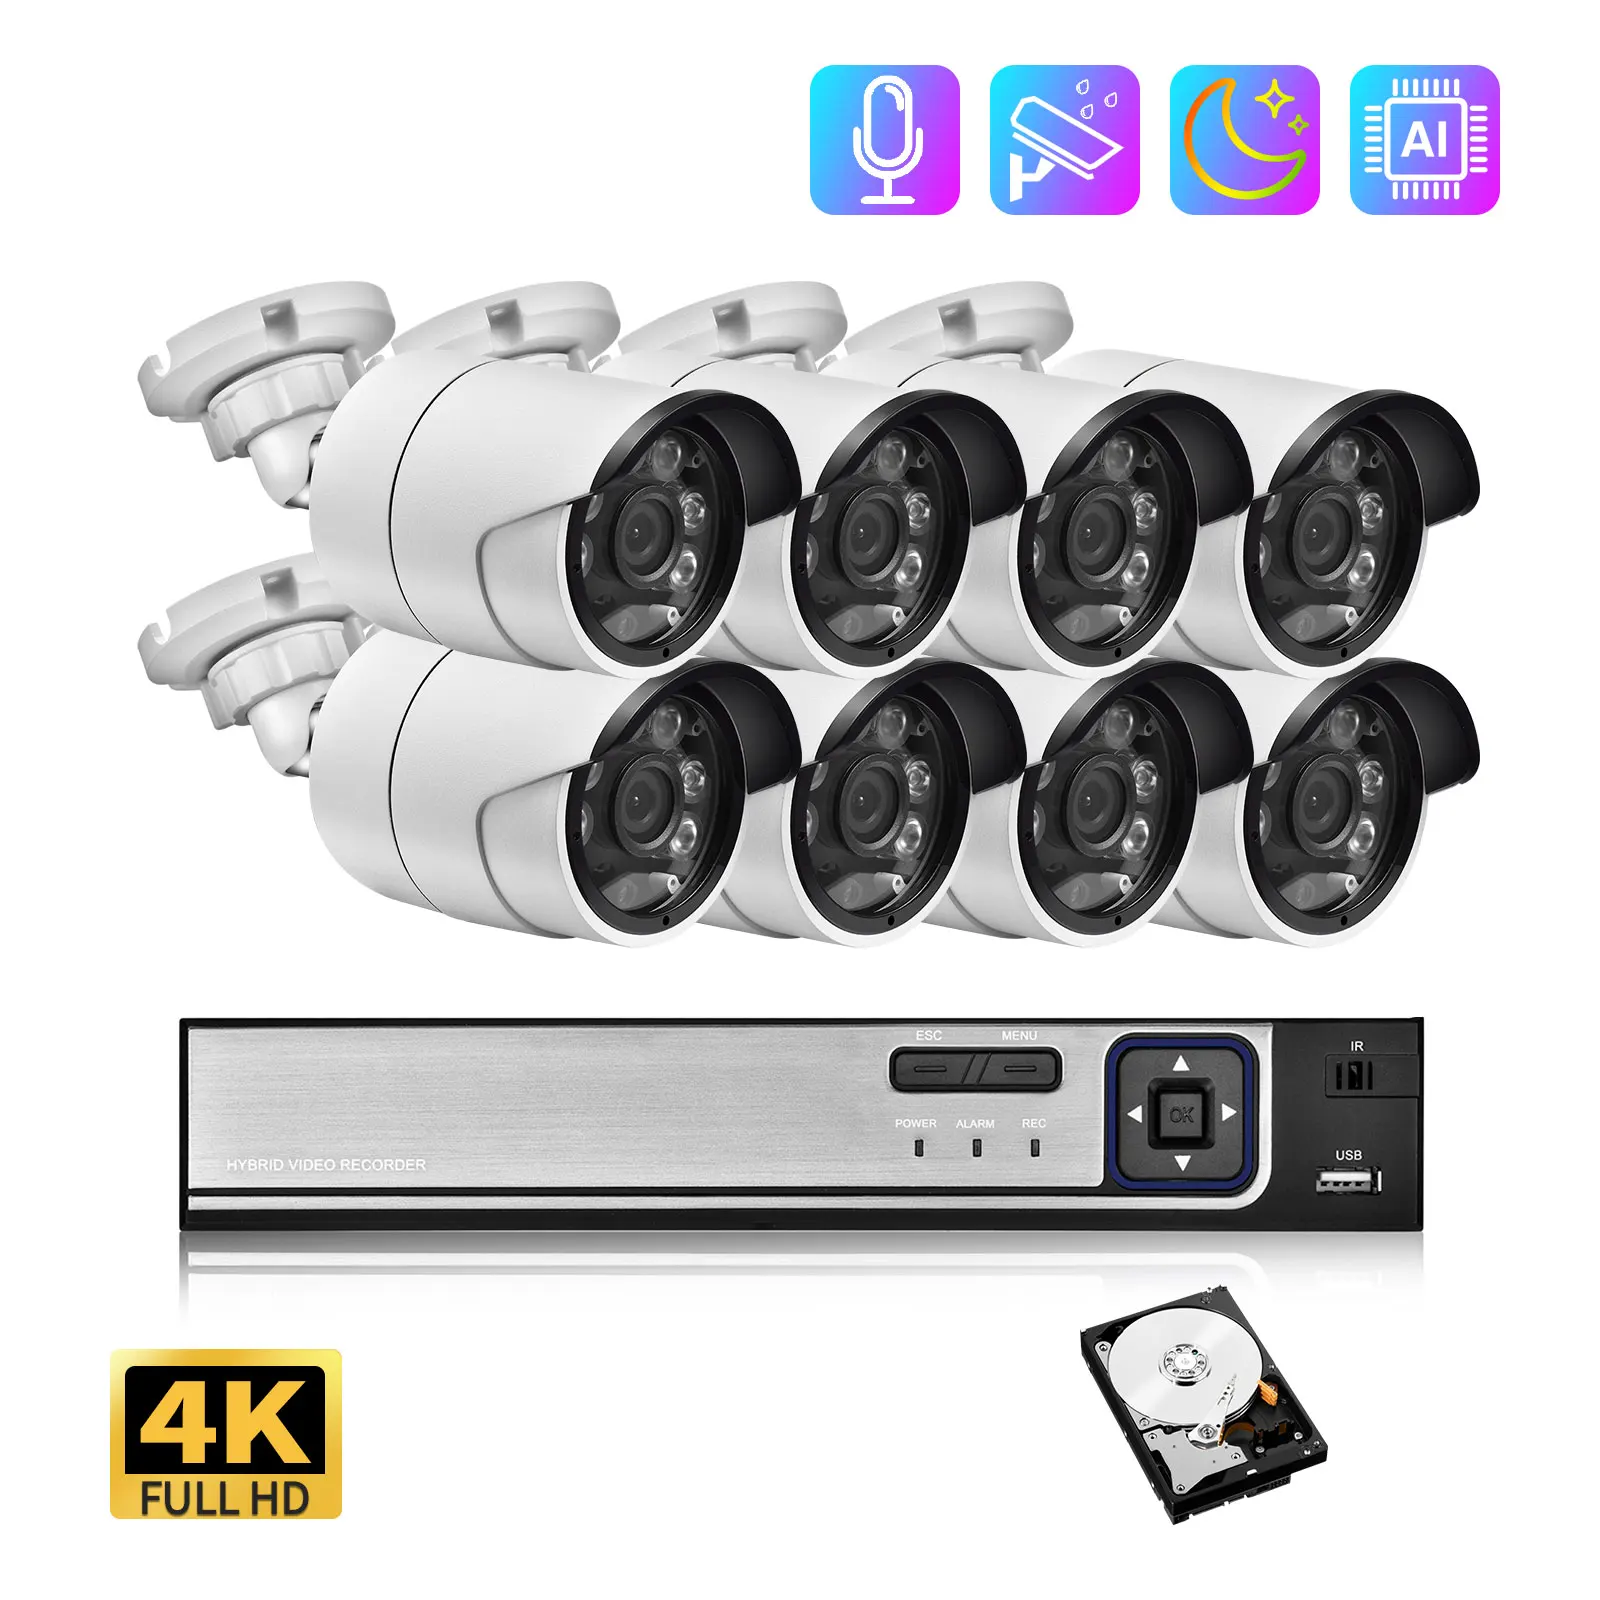 gadinan-4k-8ch-8mp-nvr-poe-camera-sistema-kit-fonte-de-luz-branca-ao-ar-livre-a-prova-de-intemperies-vidio-vigilancia-cameras-de-seguranca-cctv